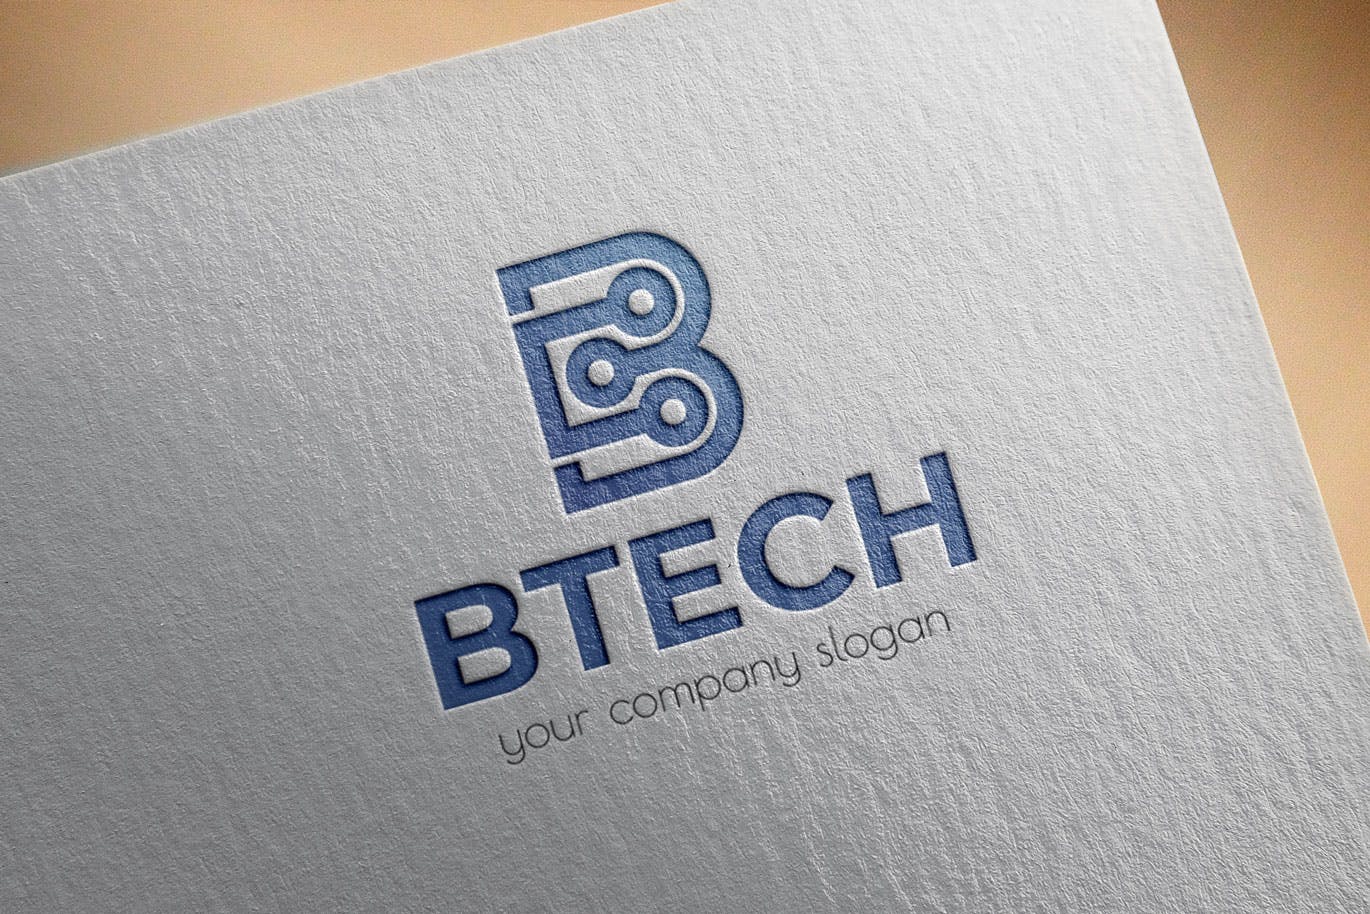 基于B字母图形的企业Logo设计16设计网精选模板 Letter Based Business Logo Template插图(2)